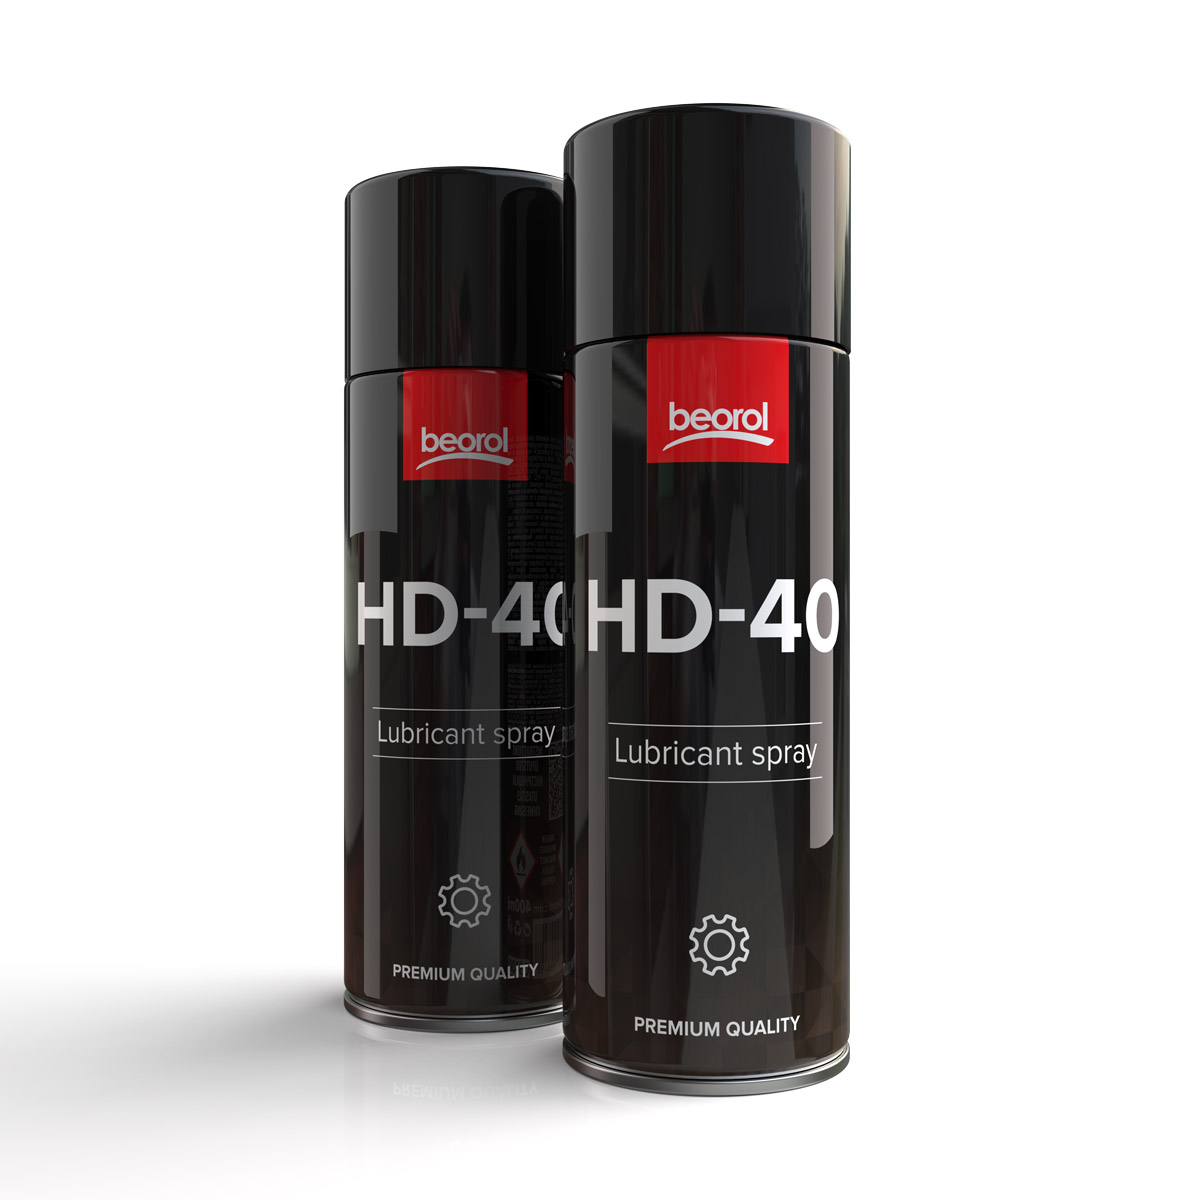 HD sprays